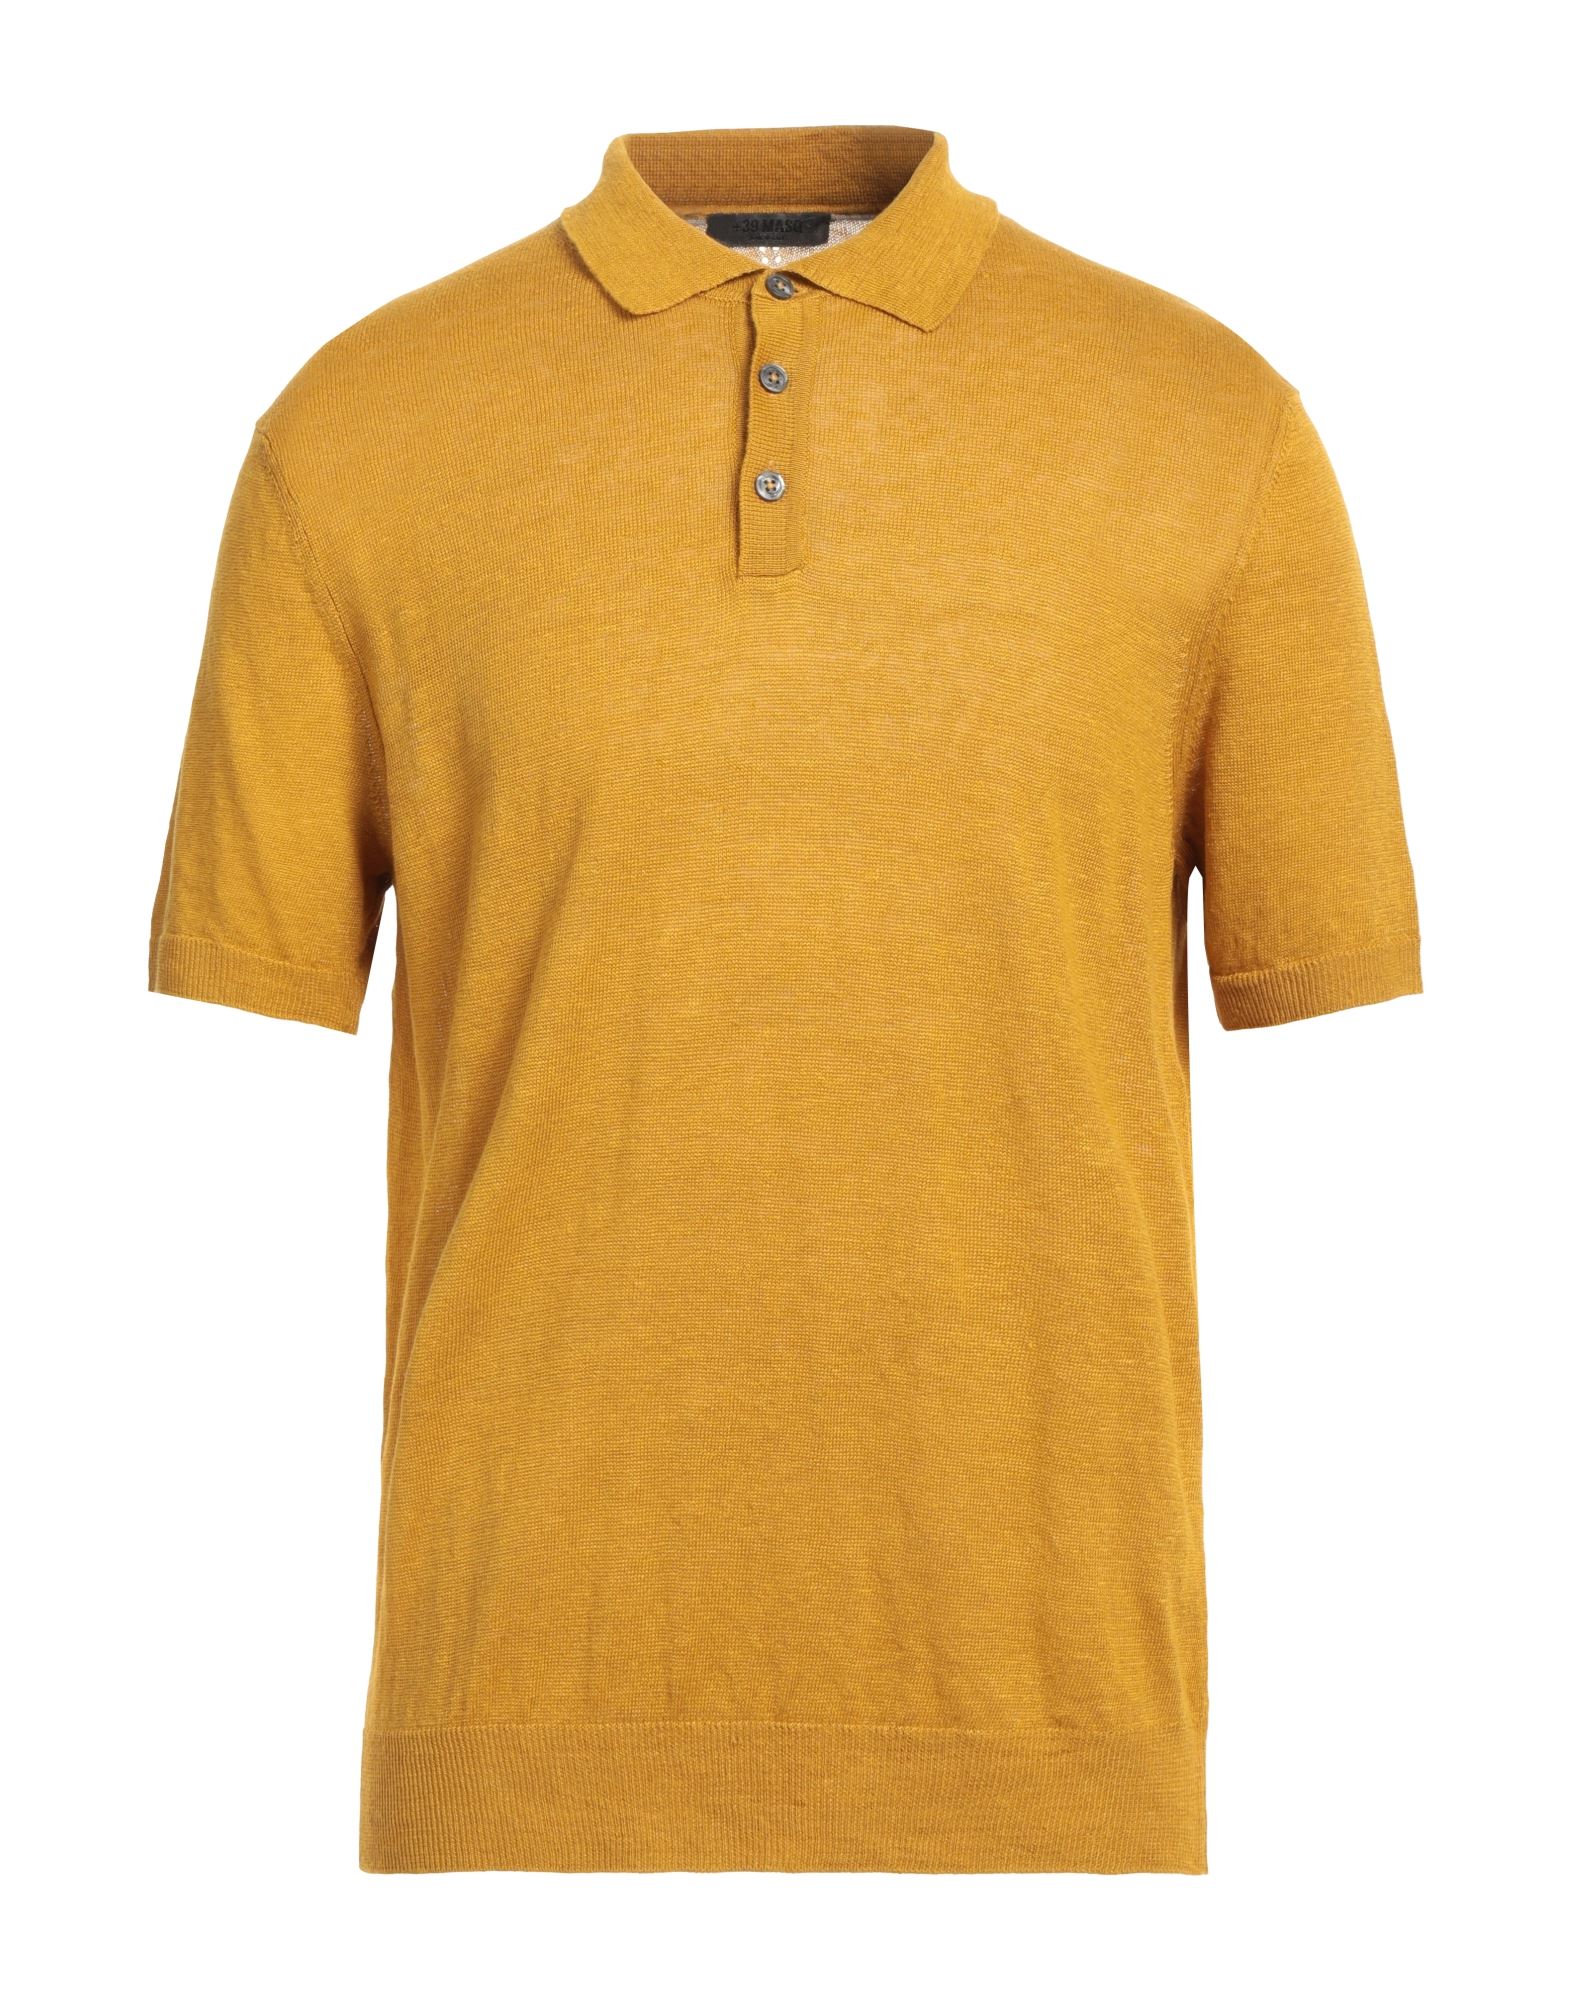 +39 Masq Man Sweater Mustard Size Xxl Linen In Yellow